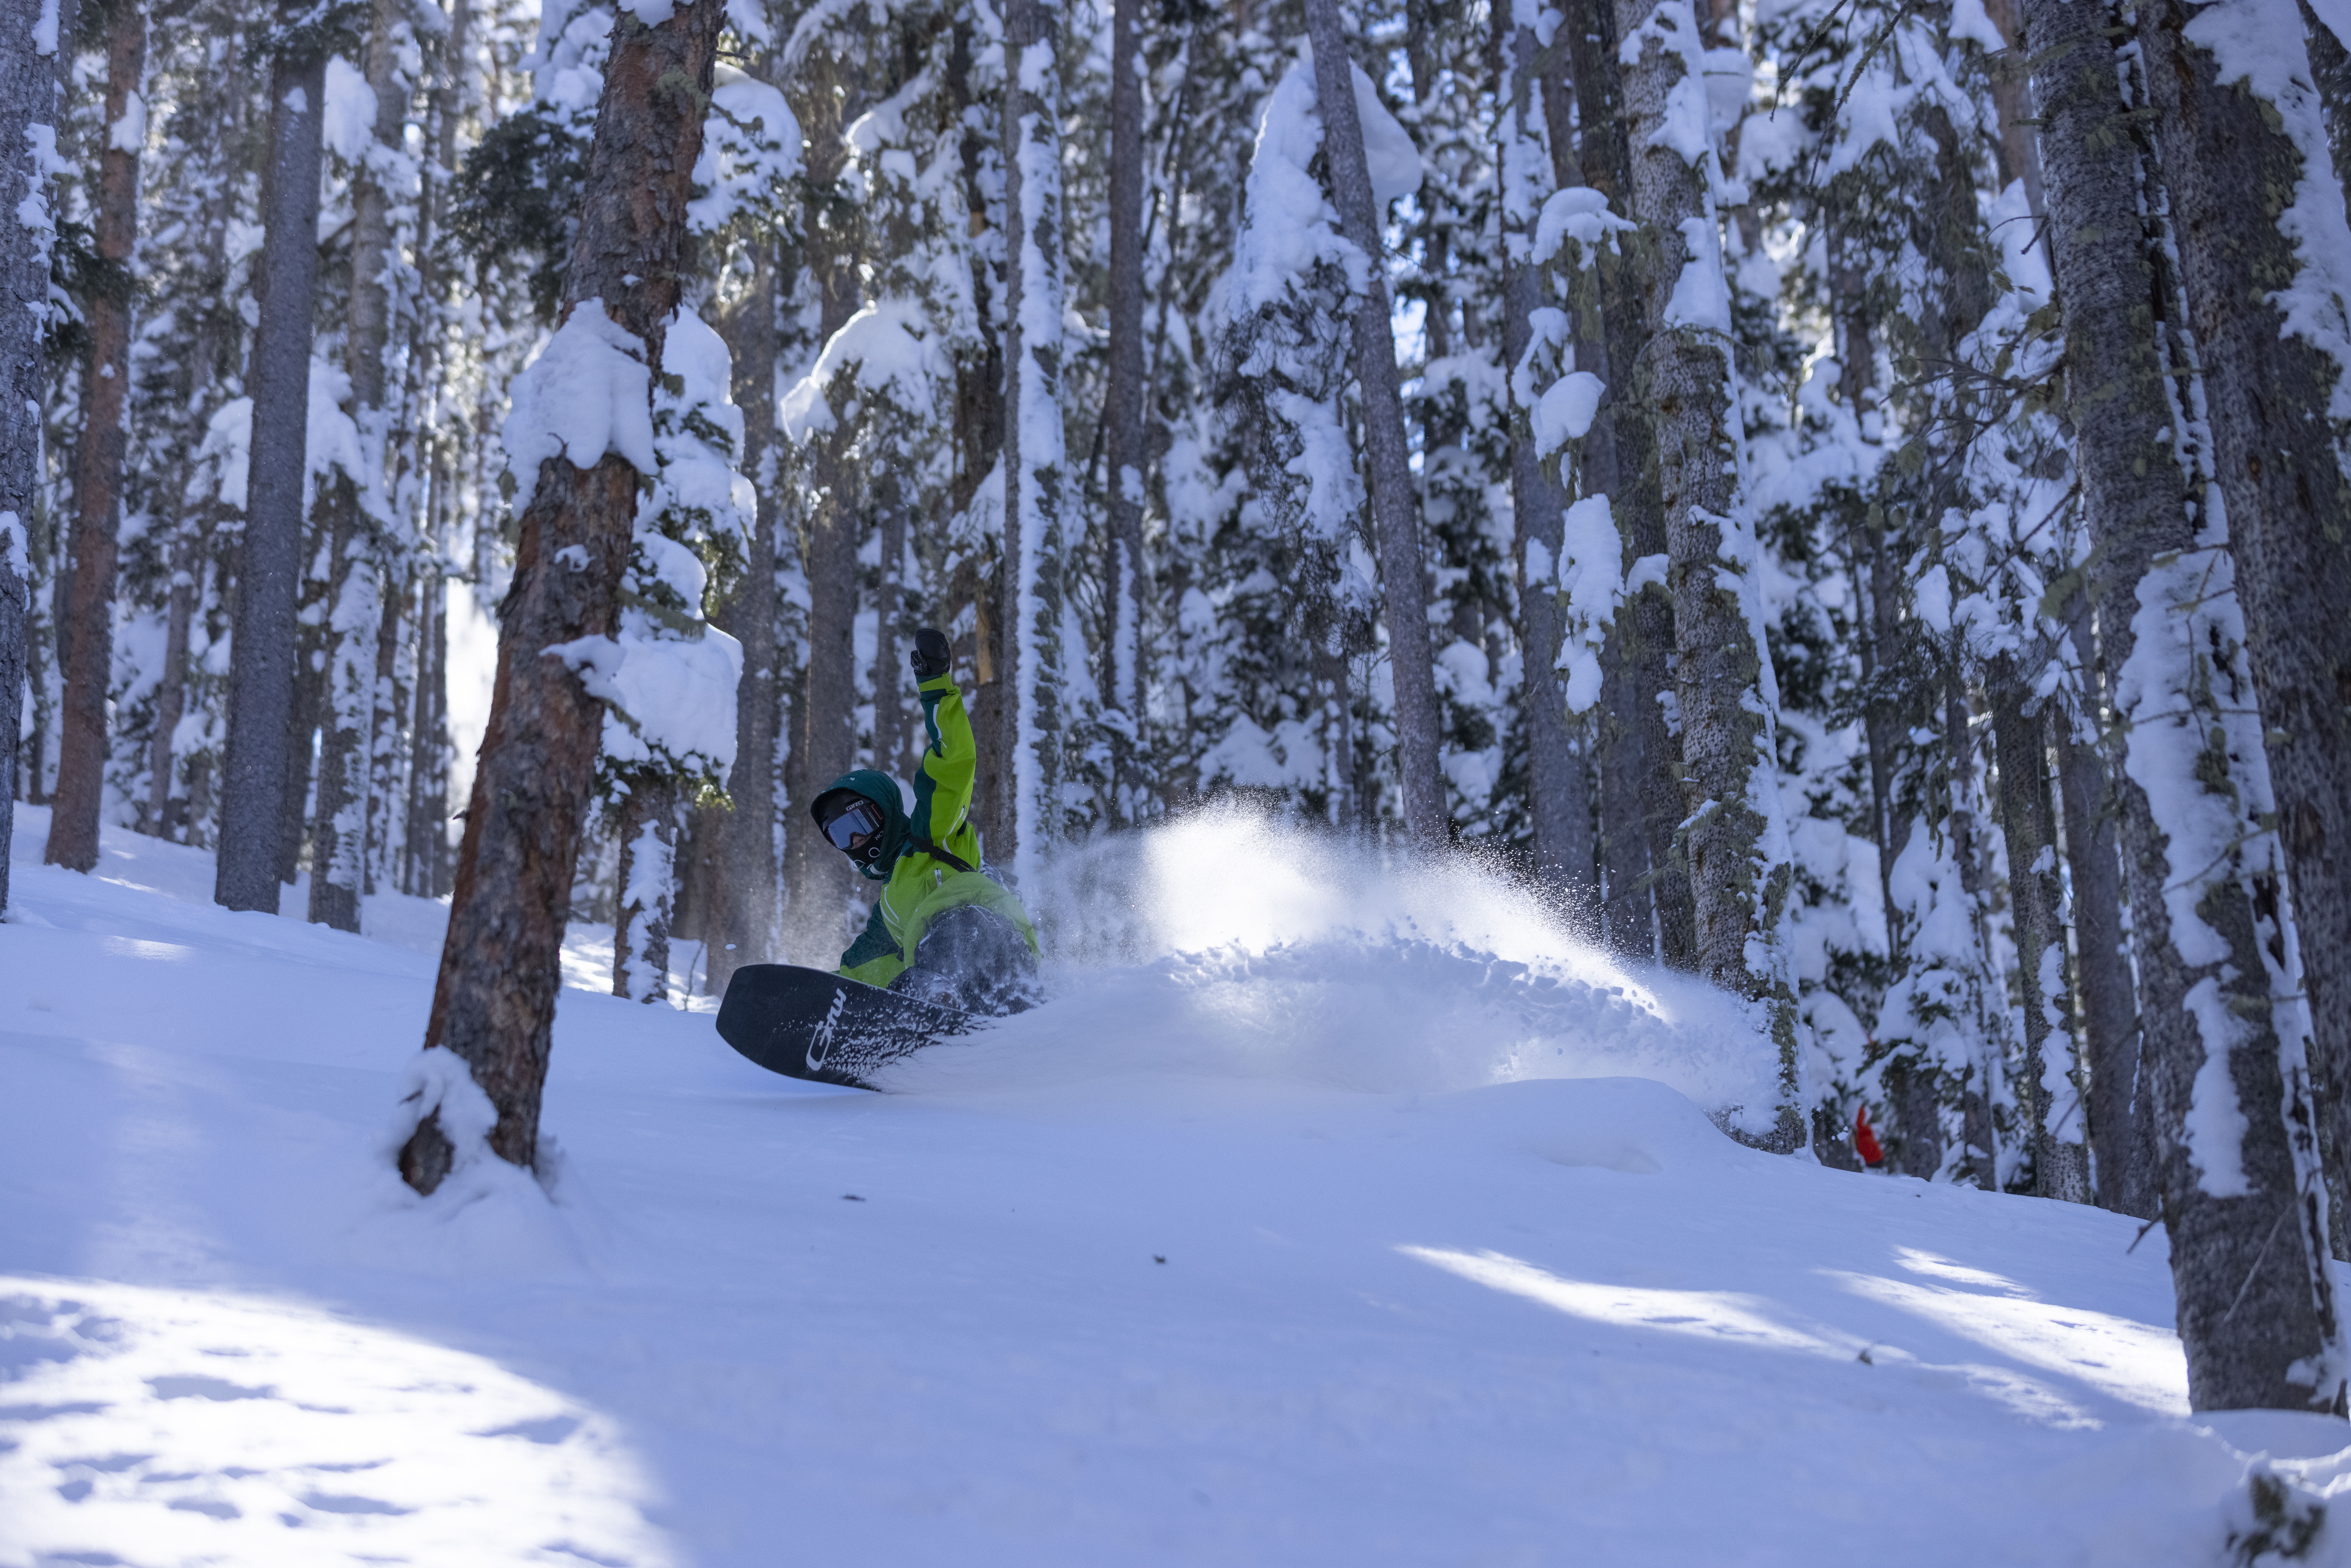 Snowboarder slices through waist deep powder in the trees